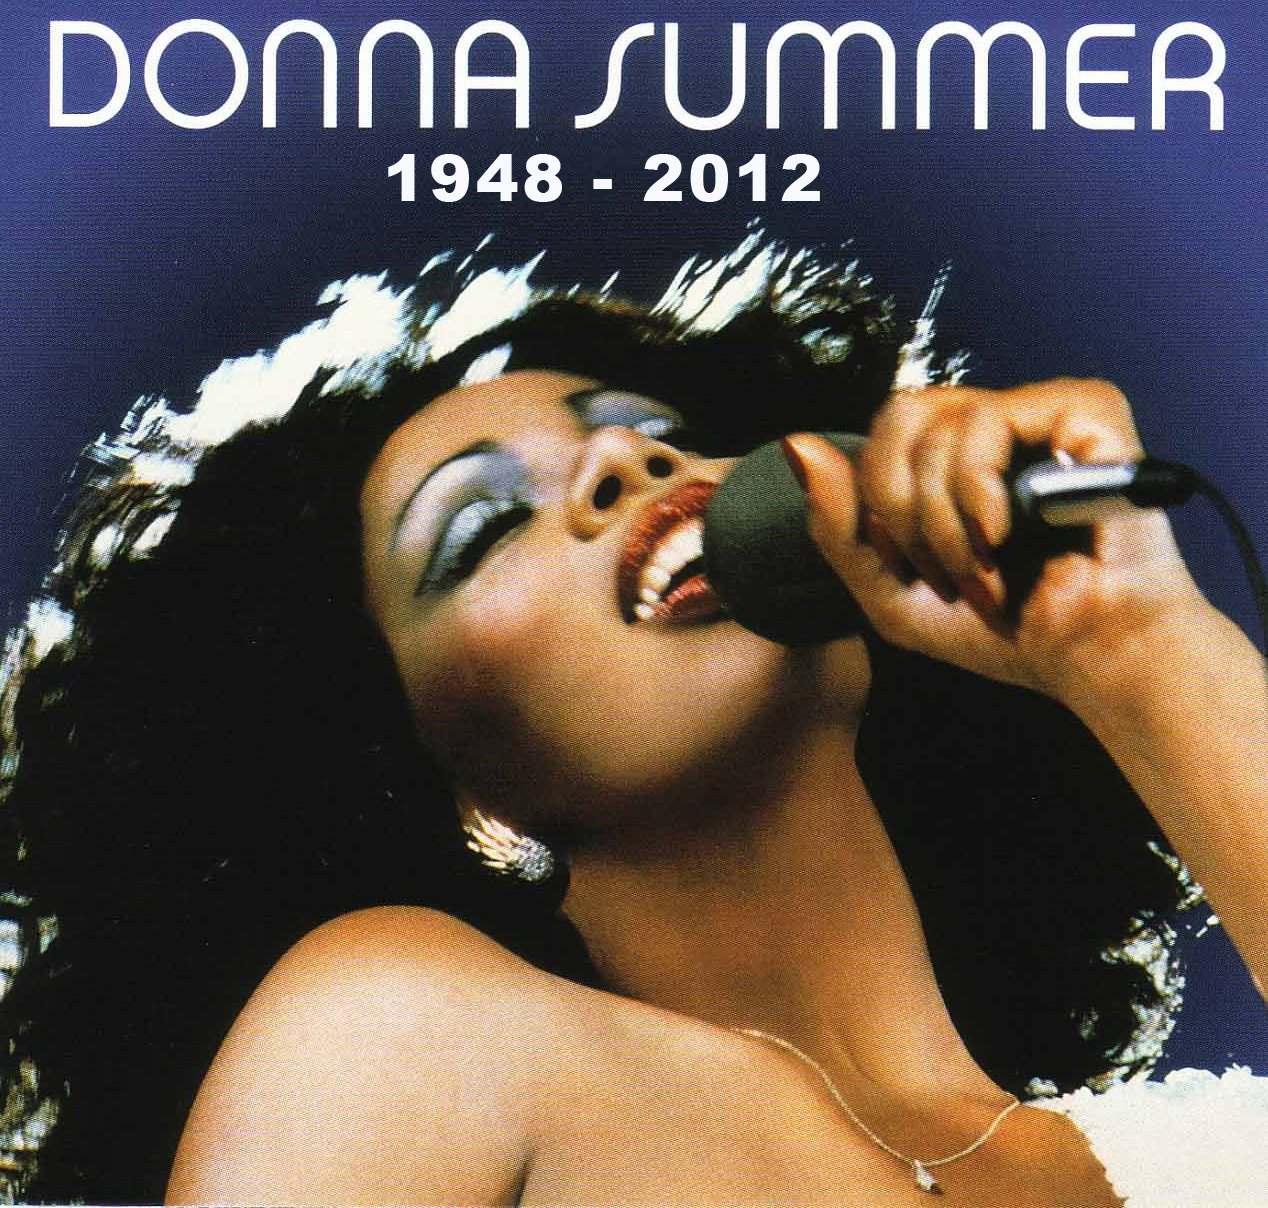 http://poponandon.com/wp-content/uploads/2012/05/Donna-Summer.jpg